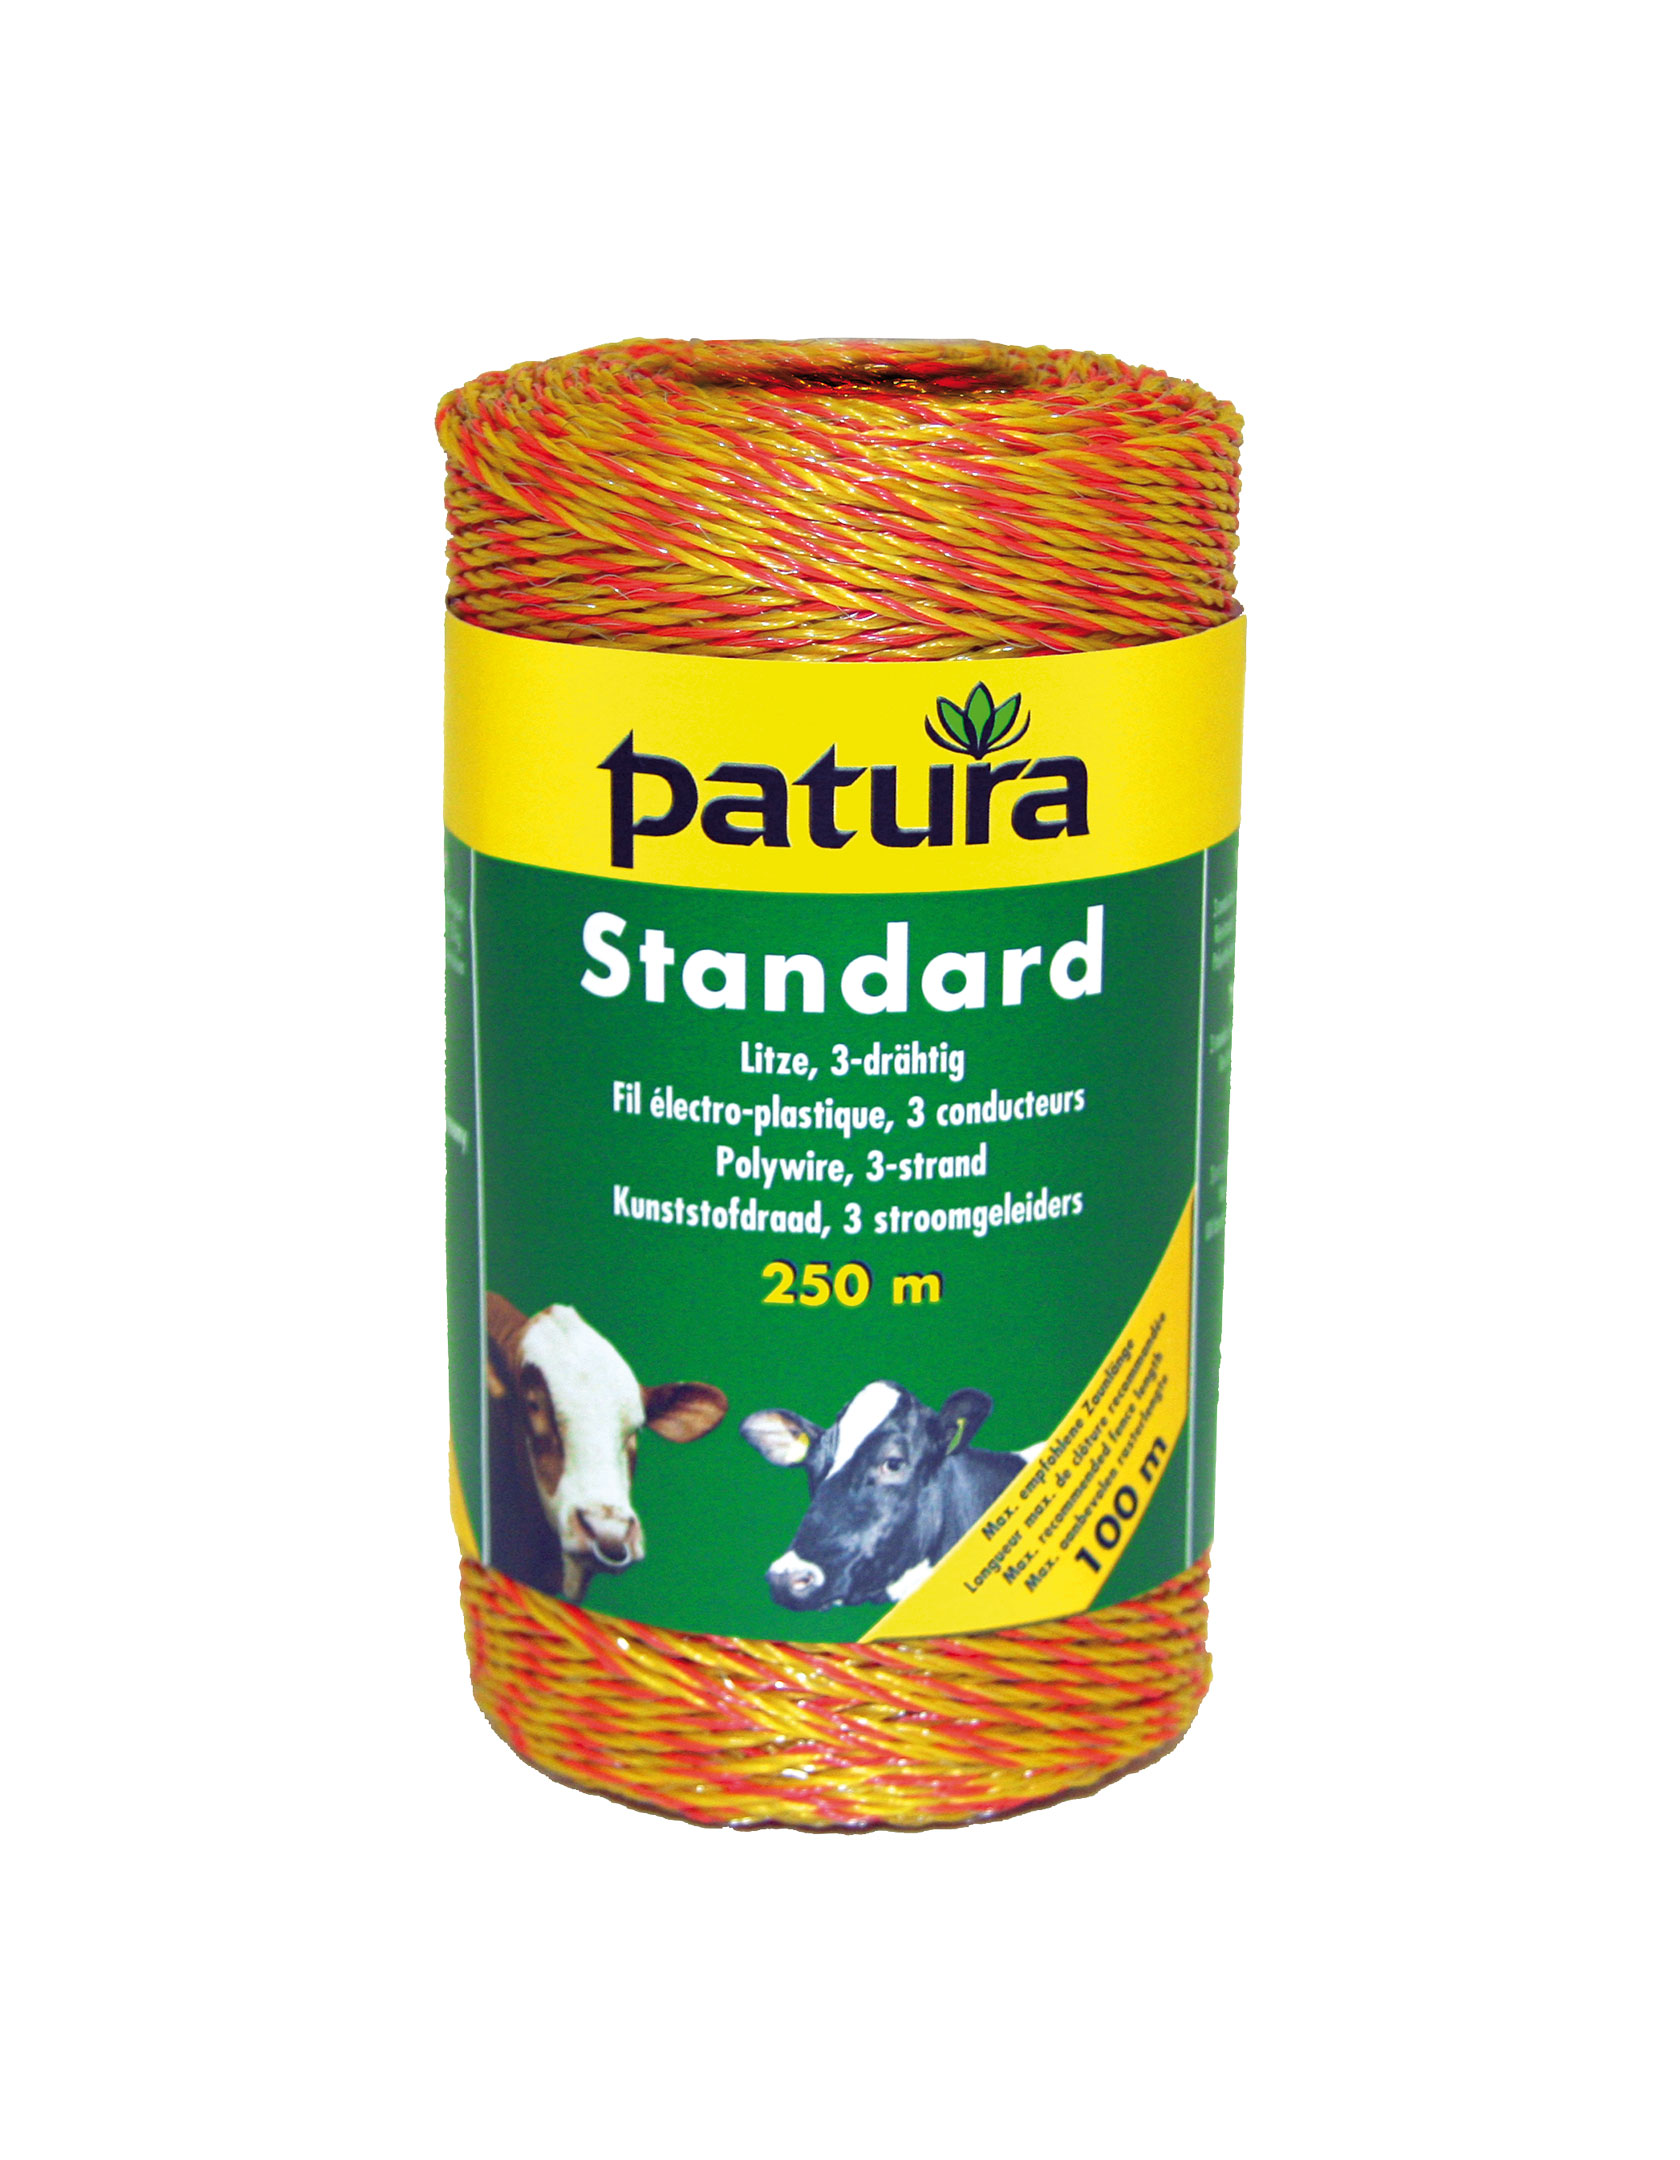 PATURA Standard Litze - 250 m gelb-orange